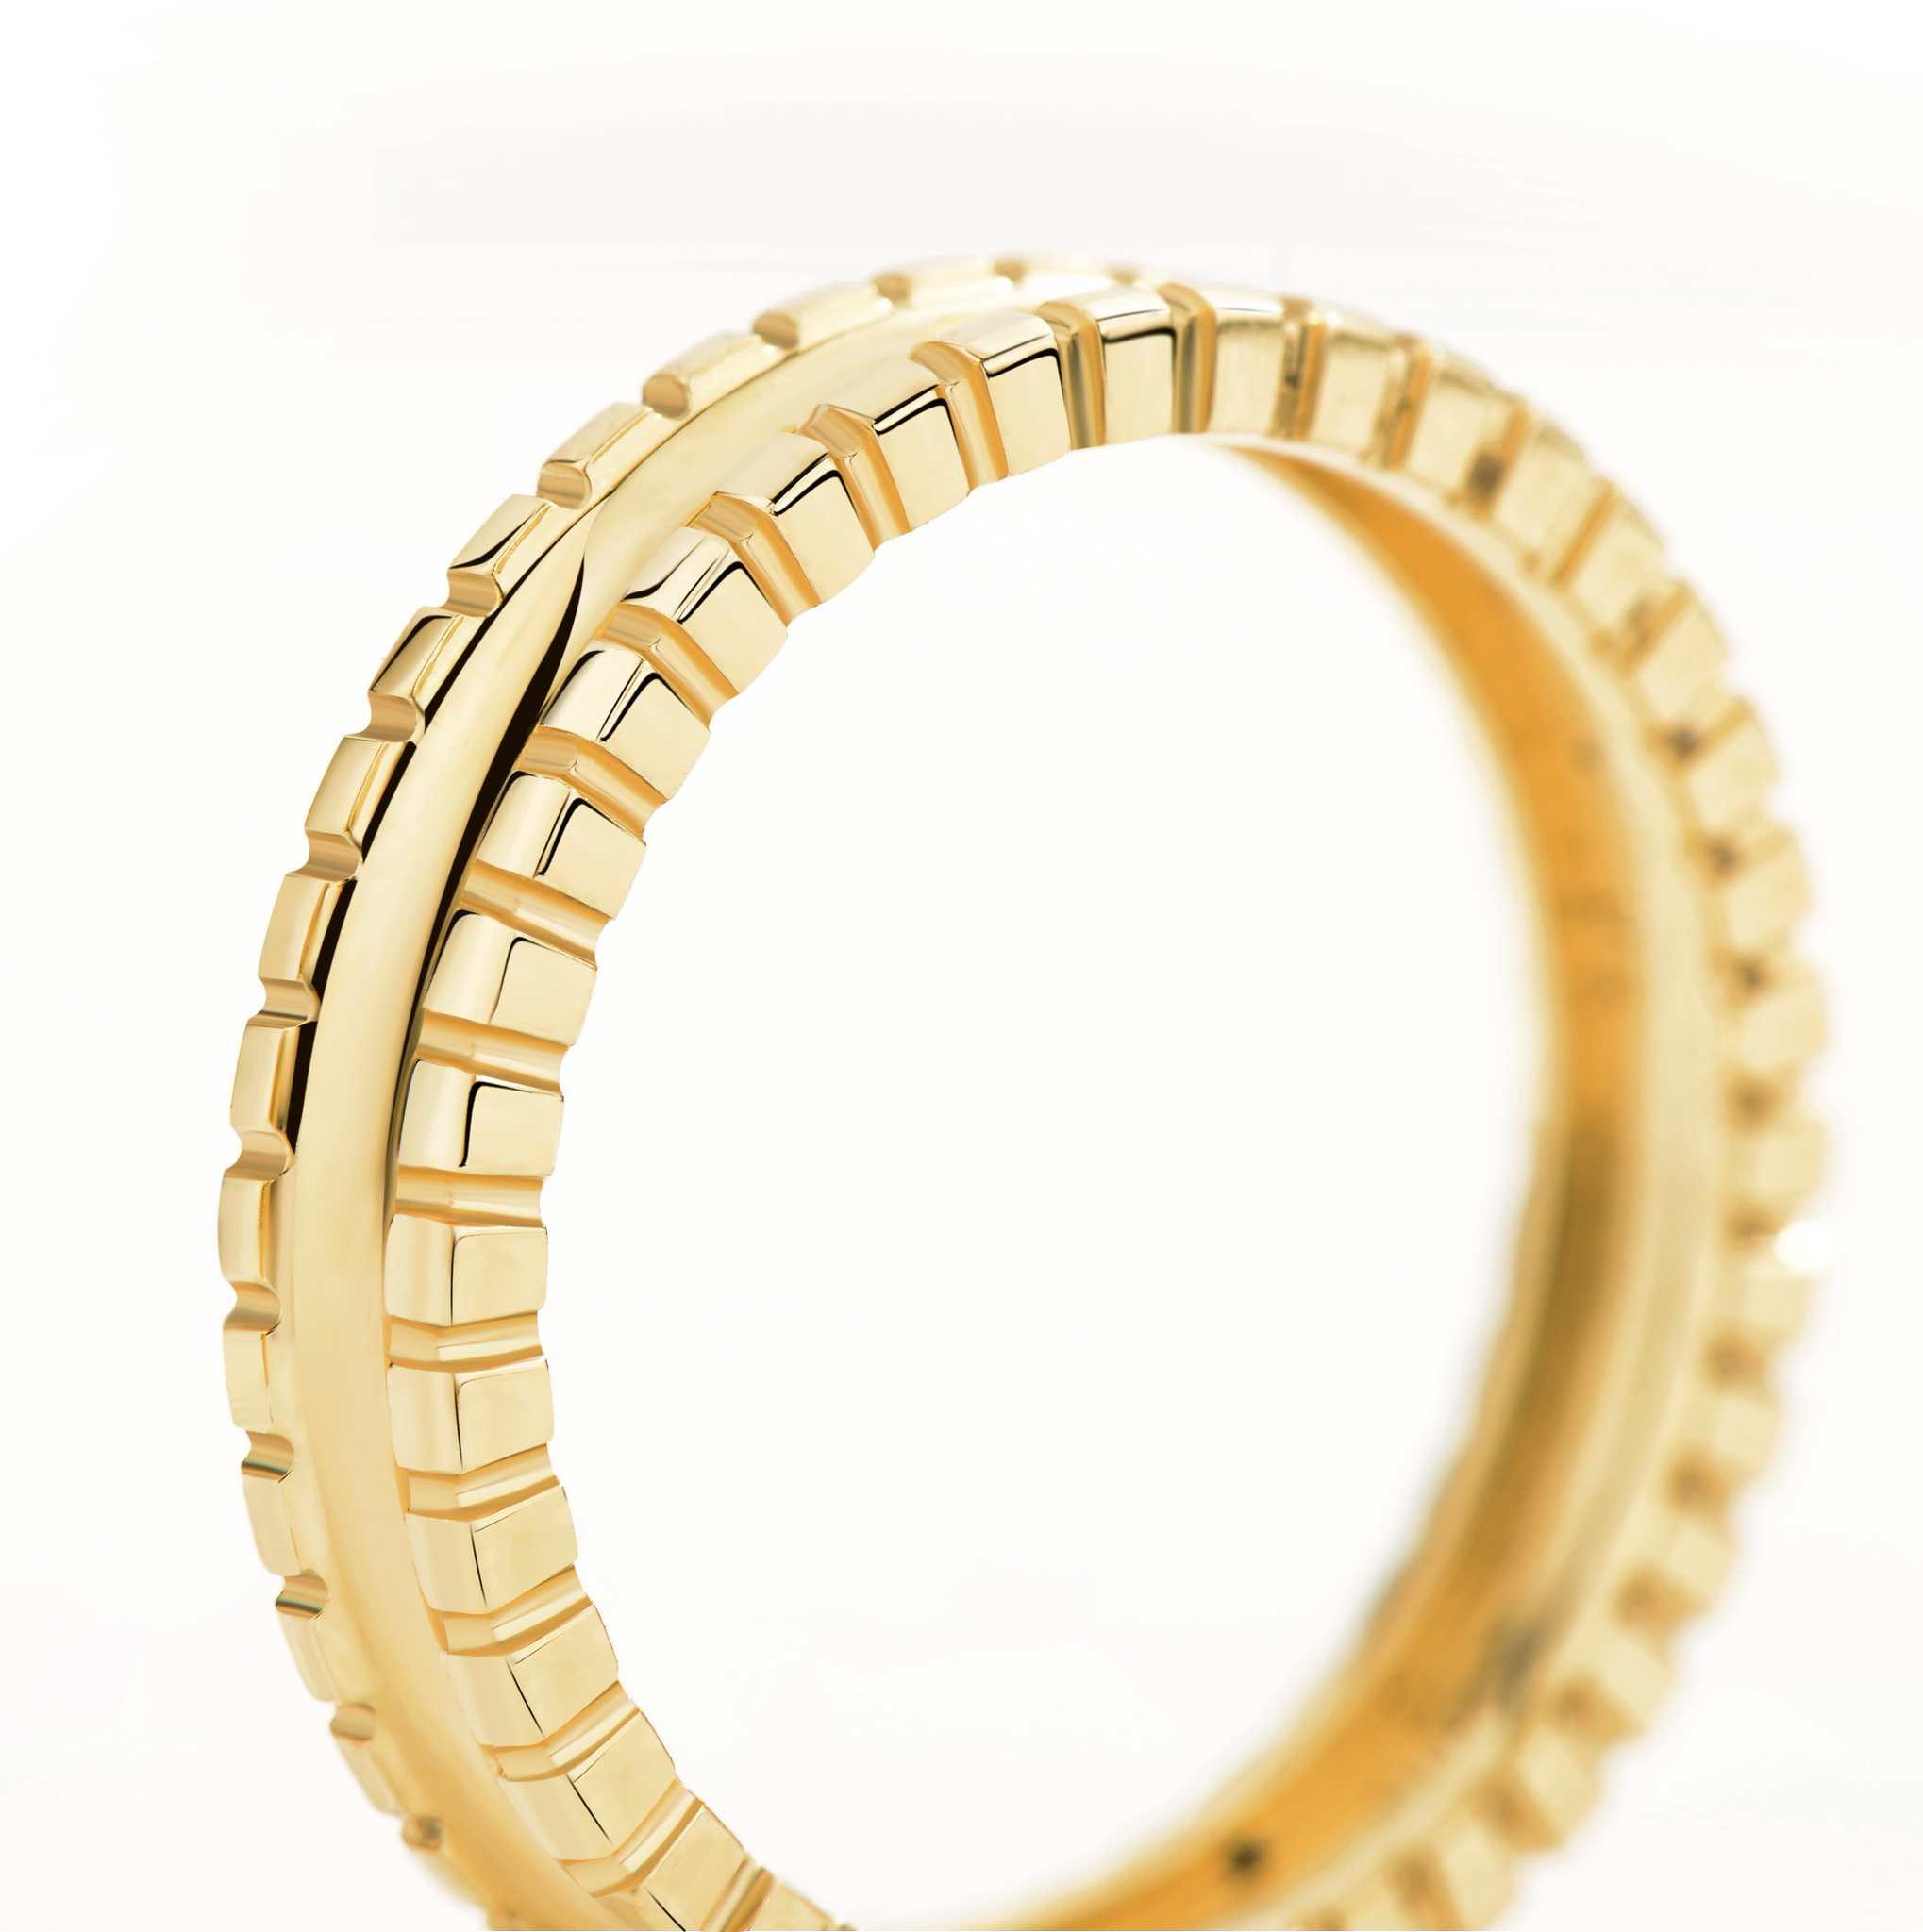 Unlock Marks-18K U-Shape Gold Ring